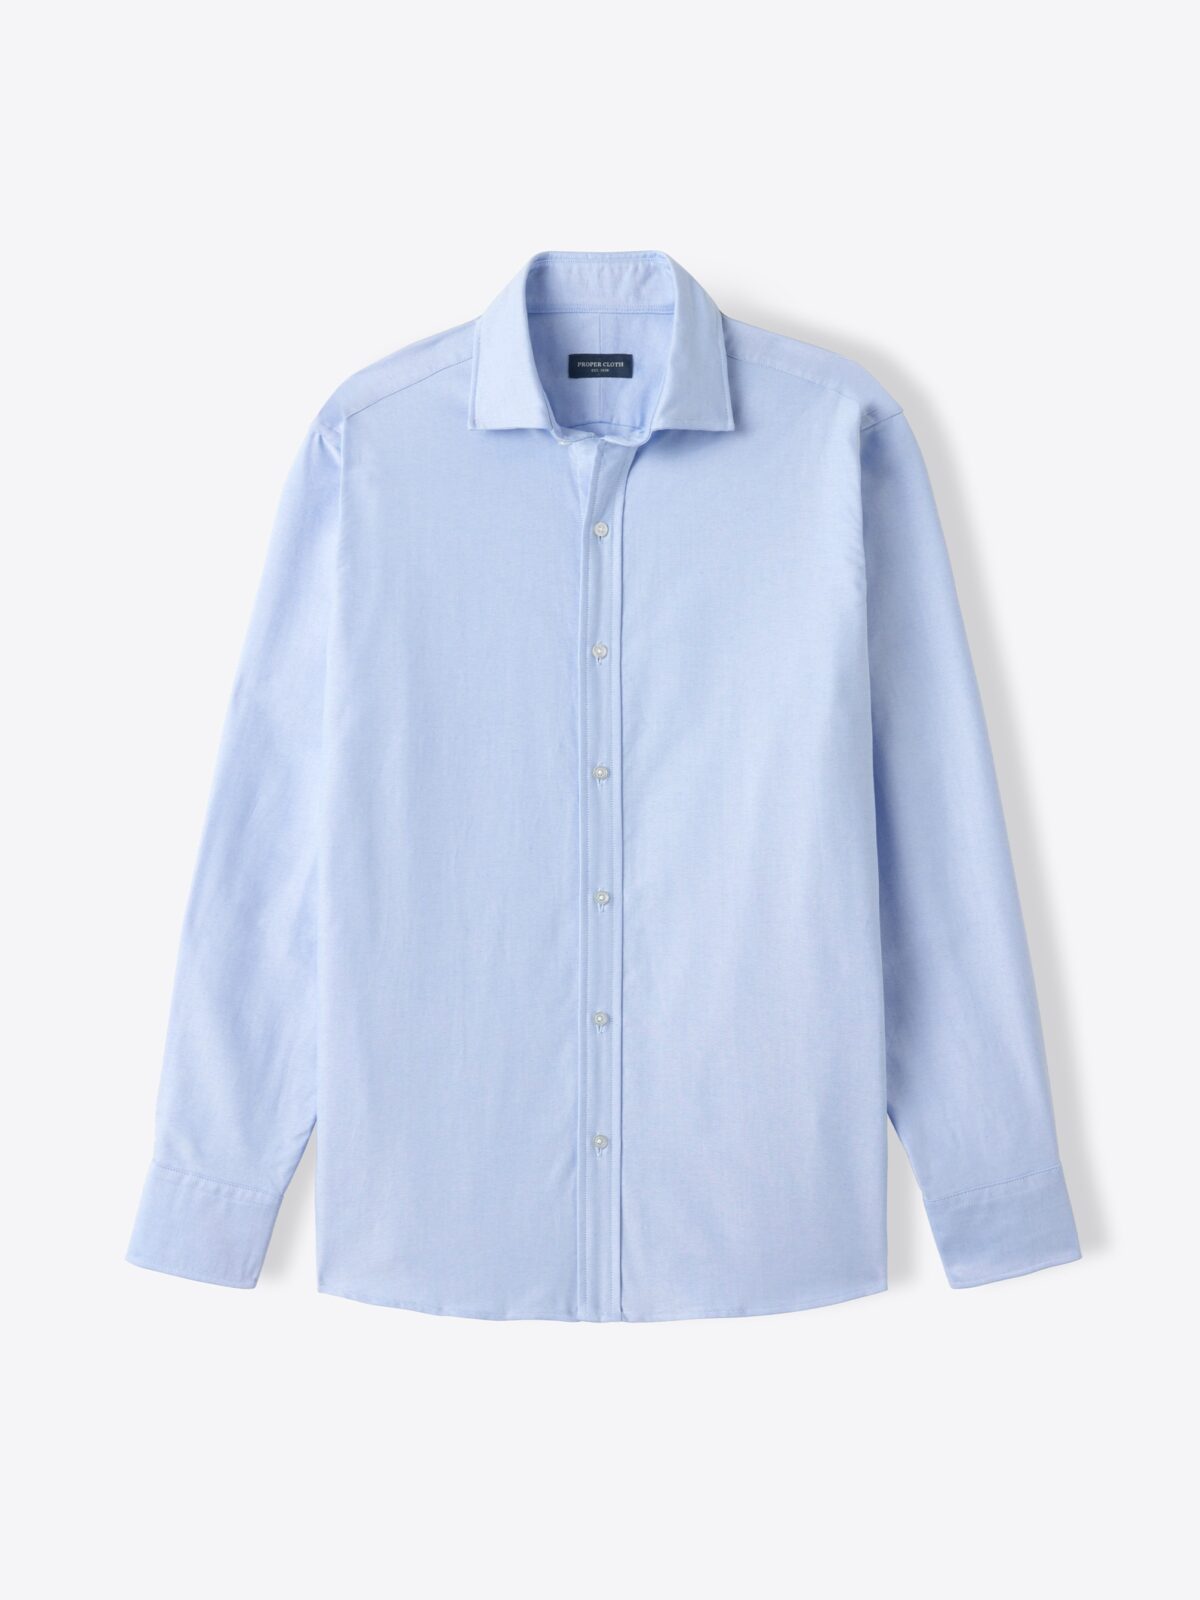 spread collar button-up shirt